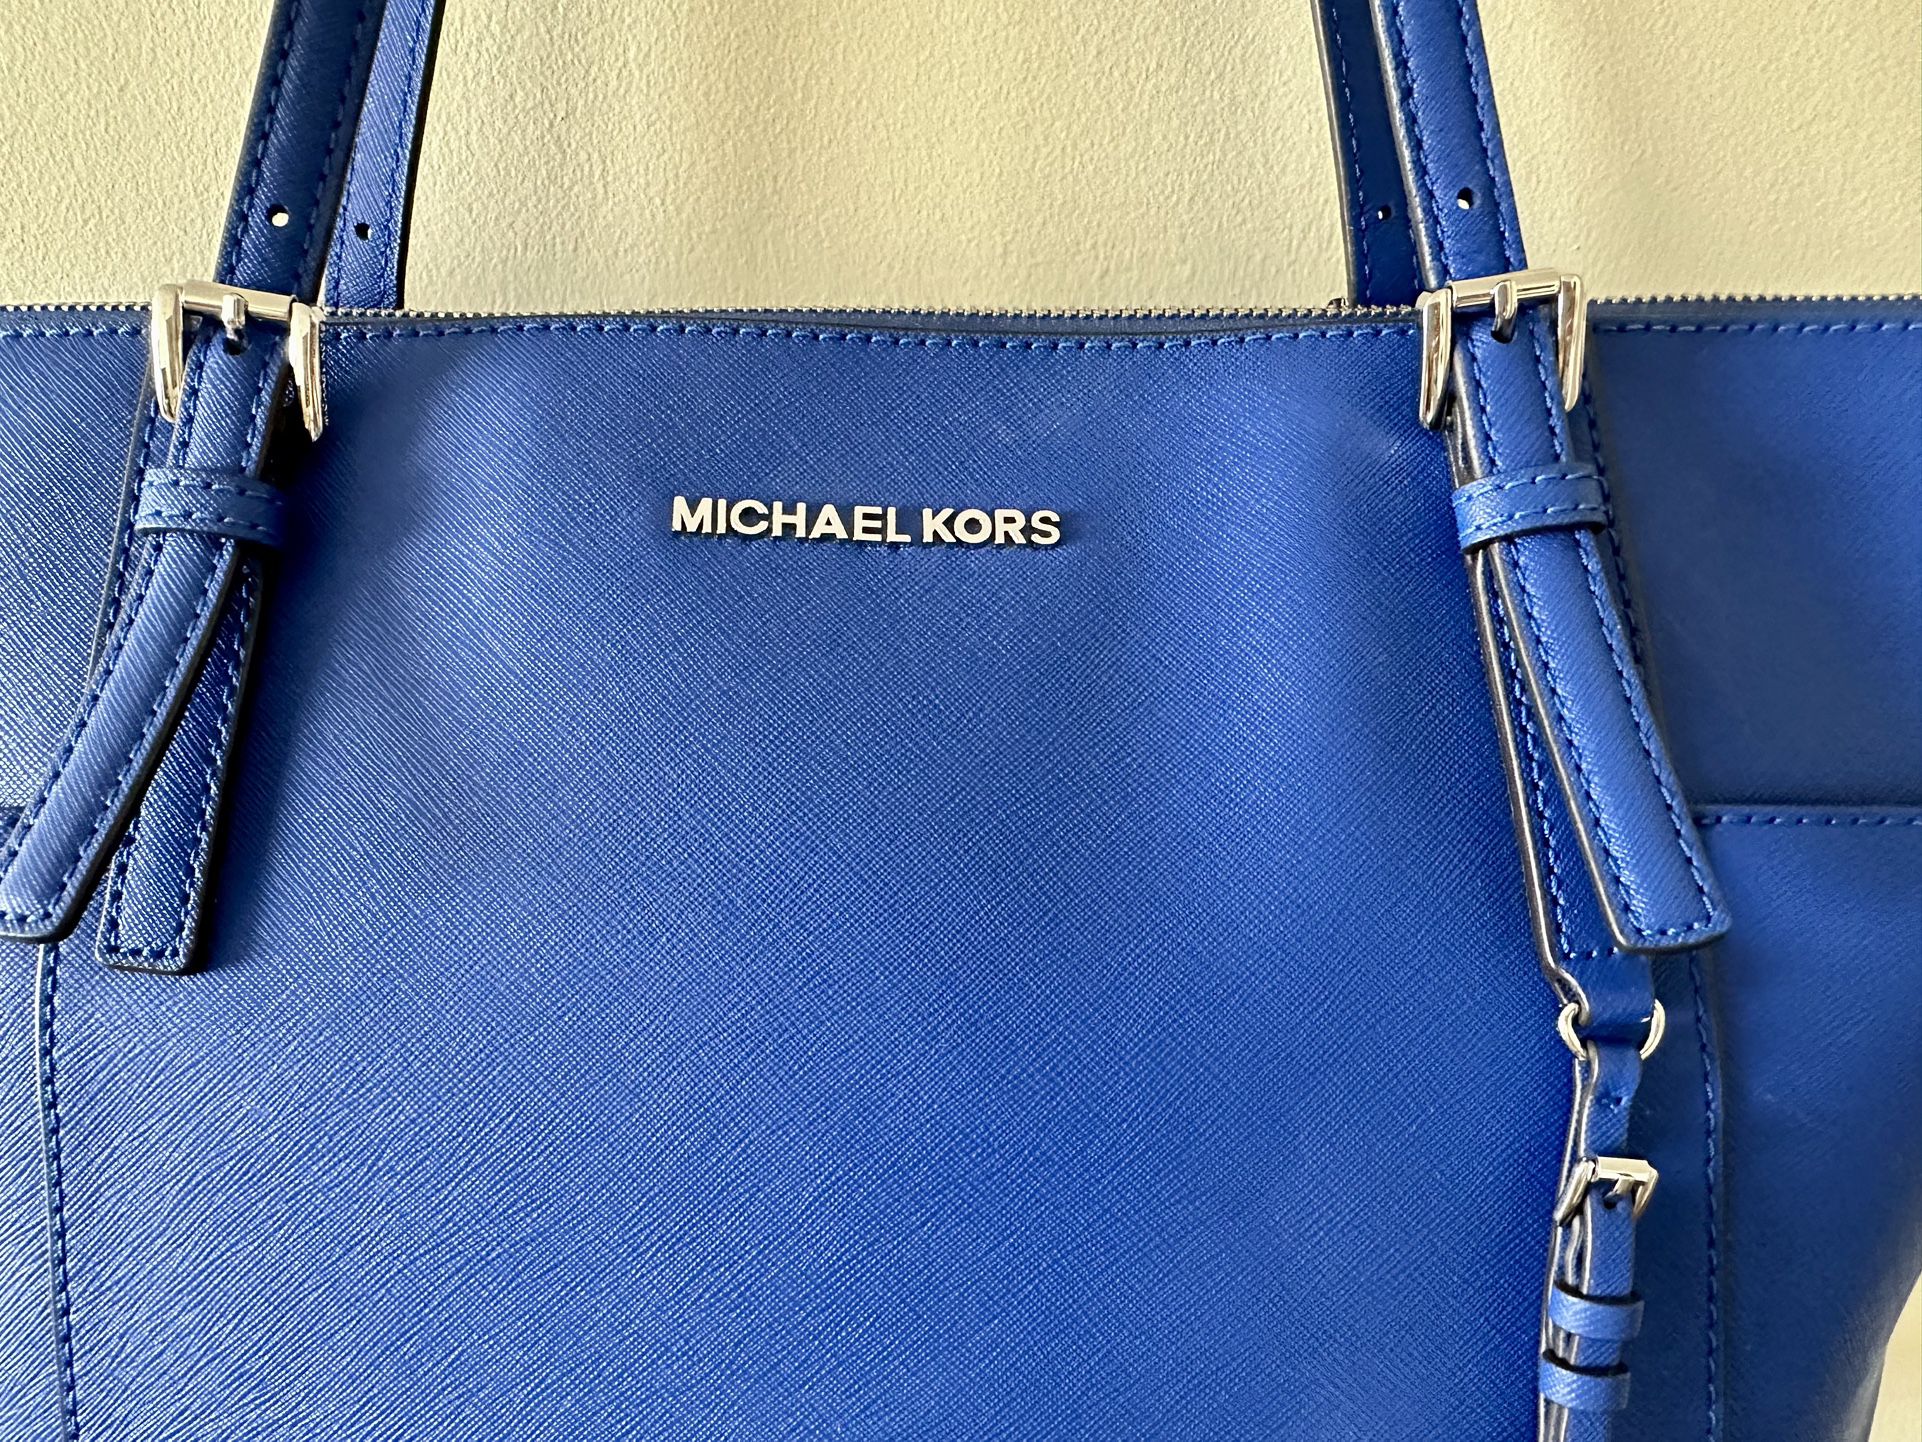 Gorgeous Cobalt Blue Michael Kors Handbag for Sale in Miami, FL - OfferUp